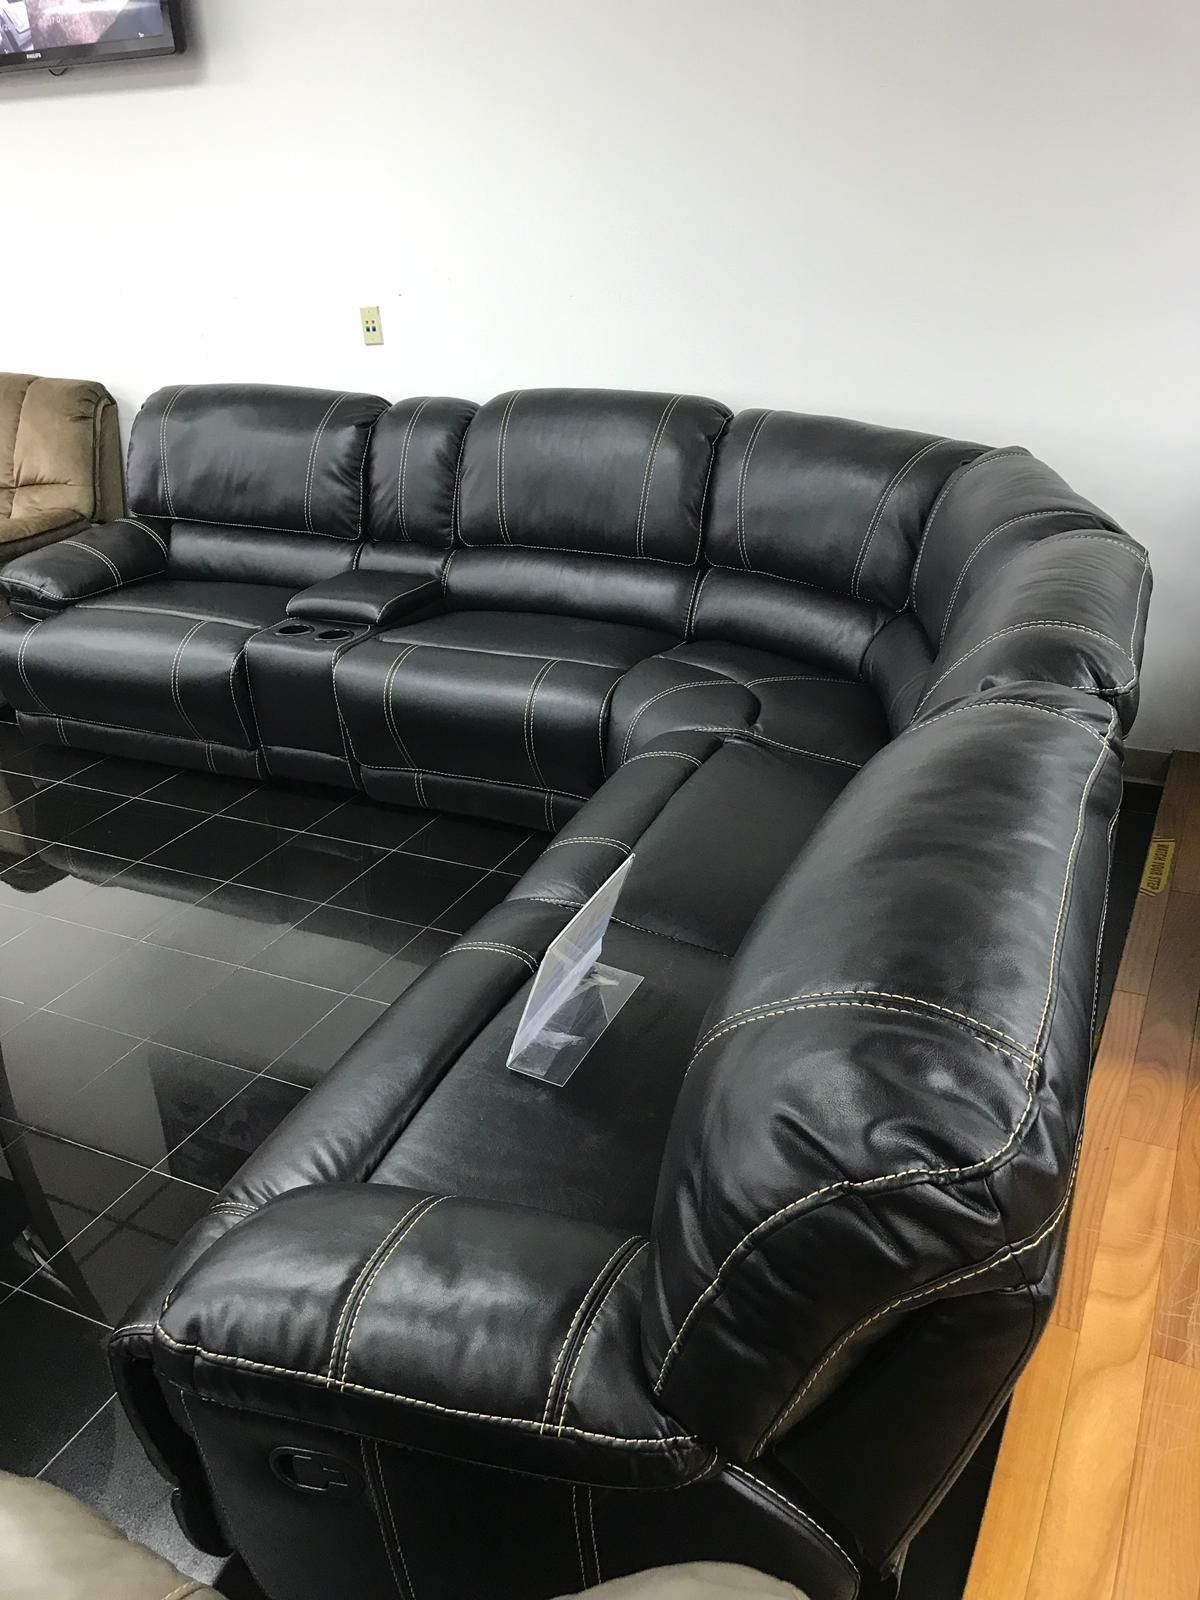 Venice Black Reclining Sectional Sofa Set ONY $999. NO CREDIT CHECK FINANCING